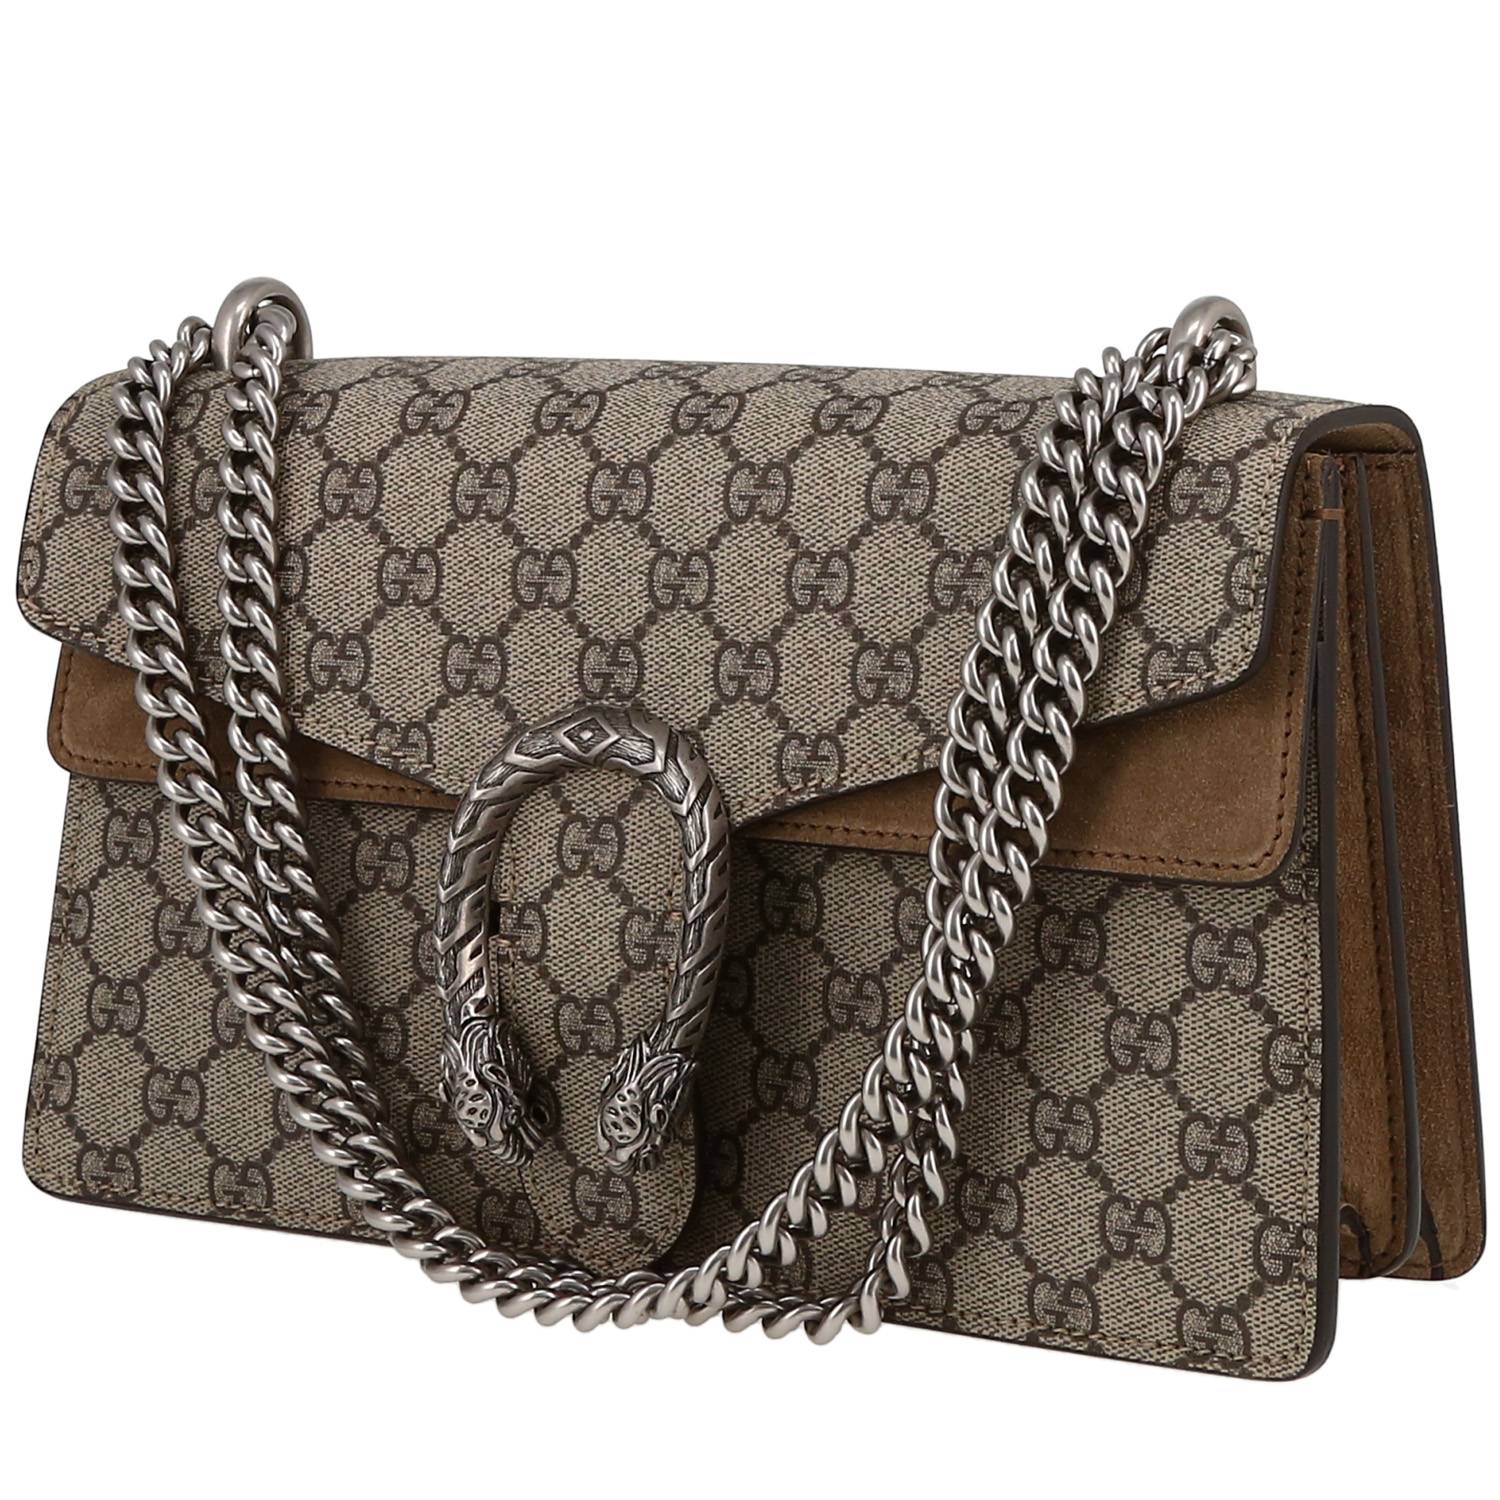 Gucci Dionysus Bags & Handbags for Women | Authenticity Guaranteed | eBay